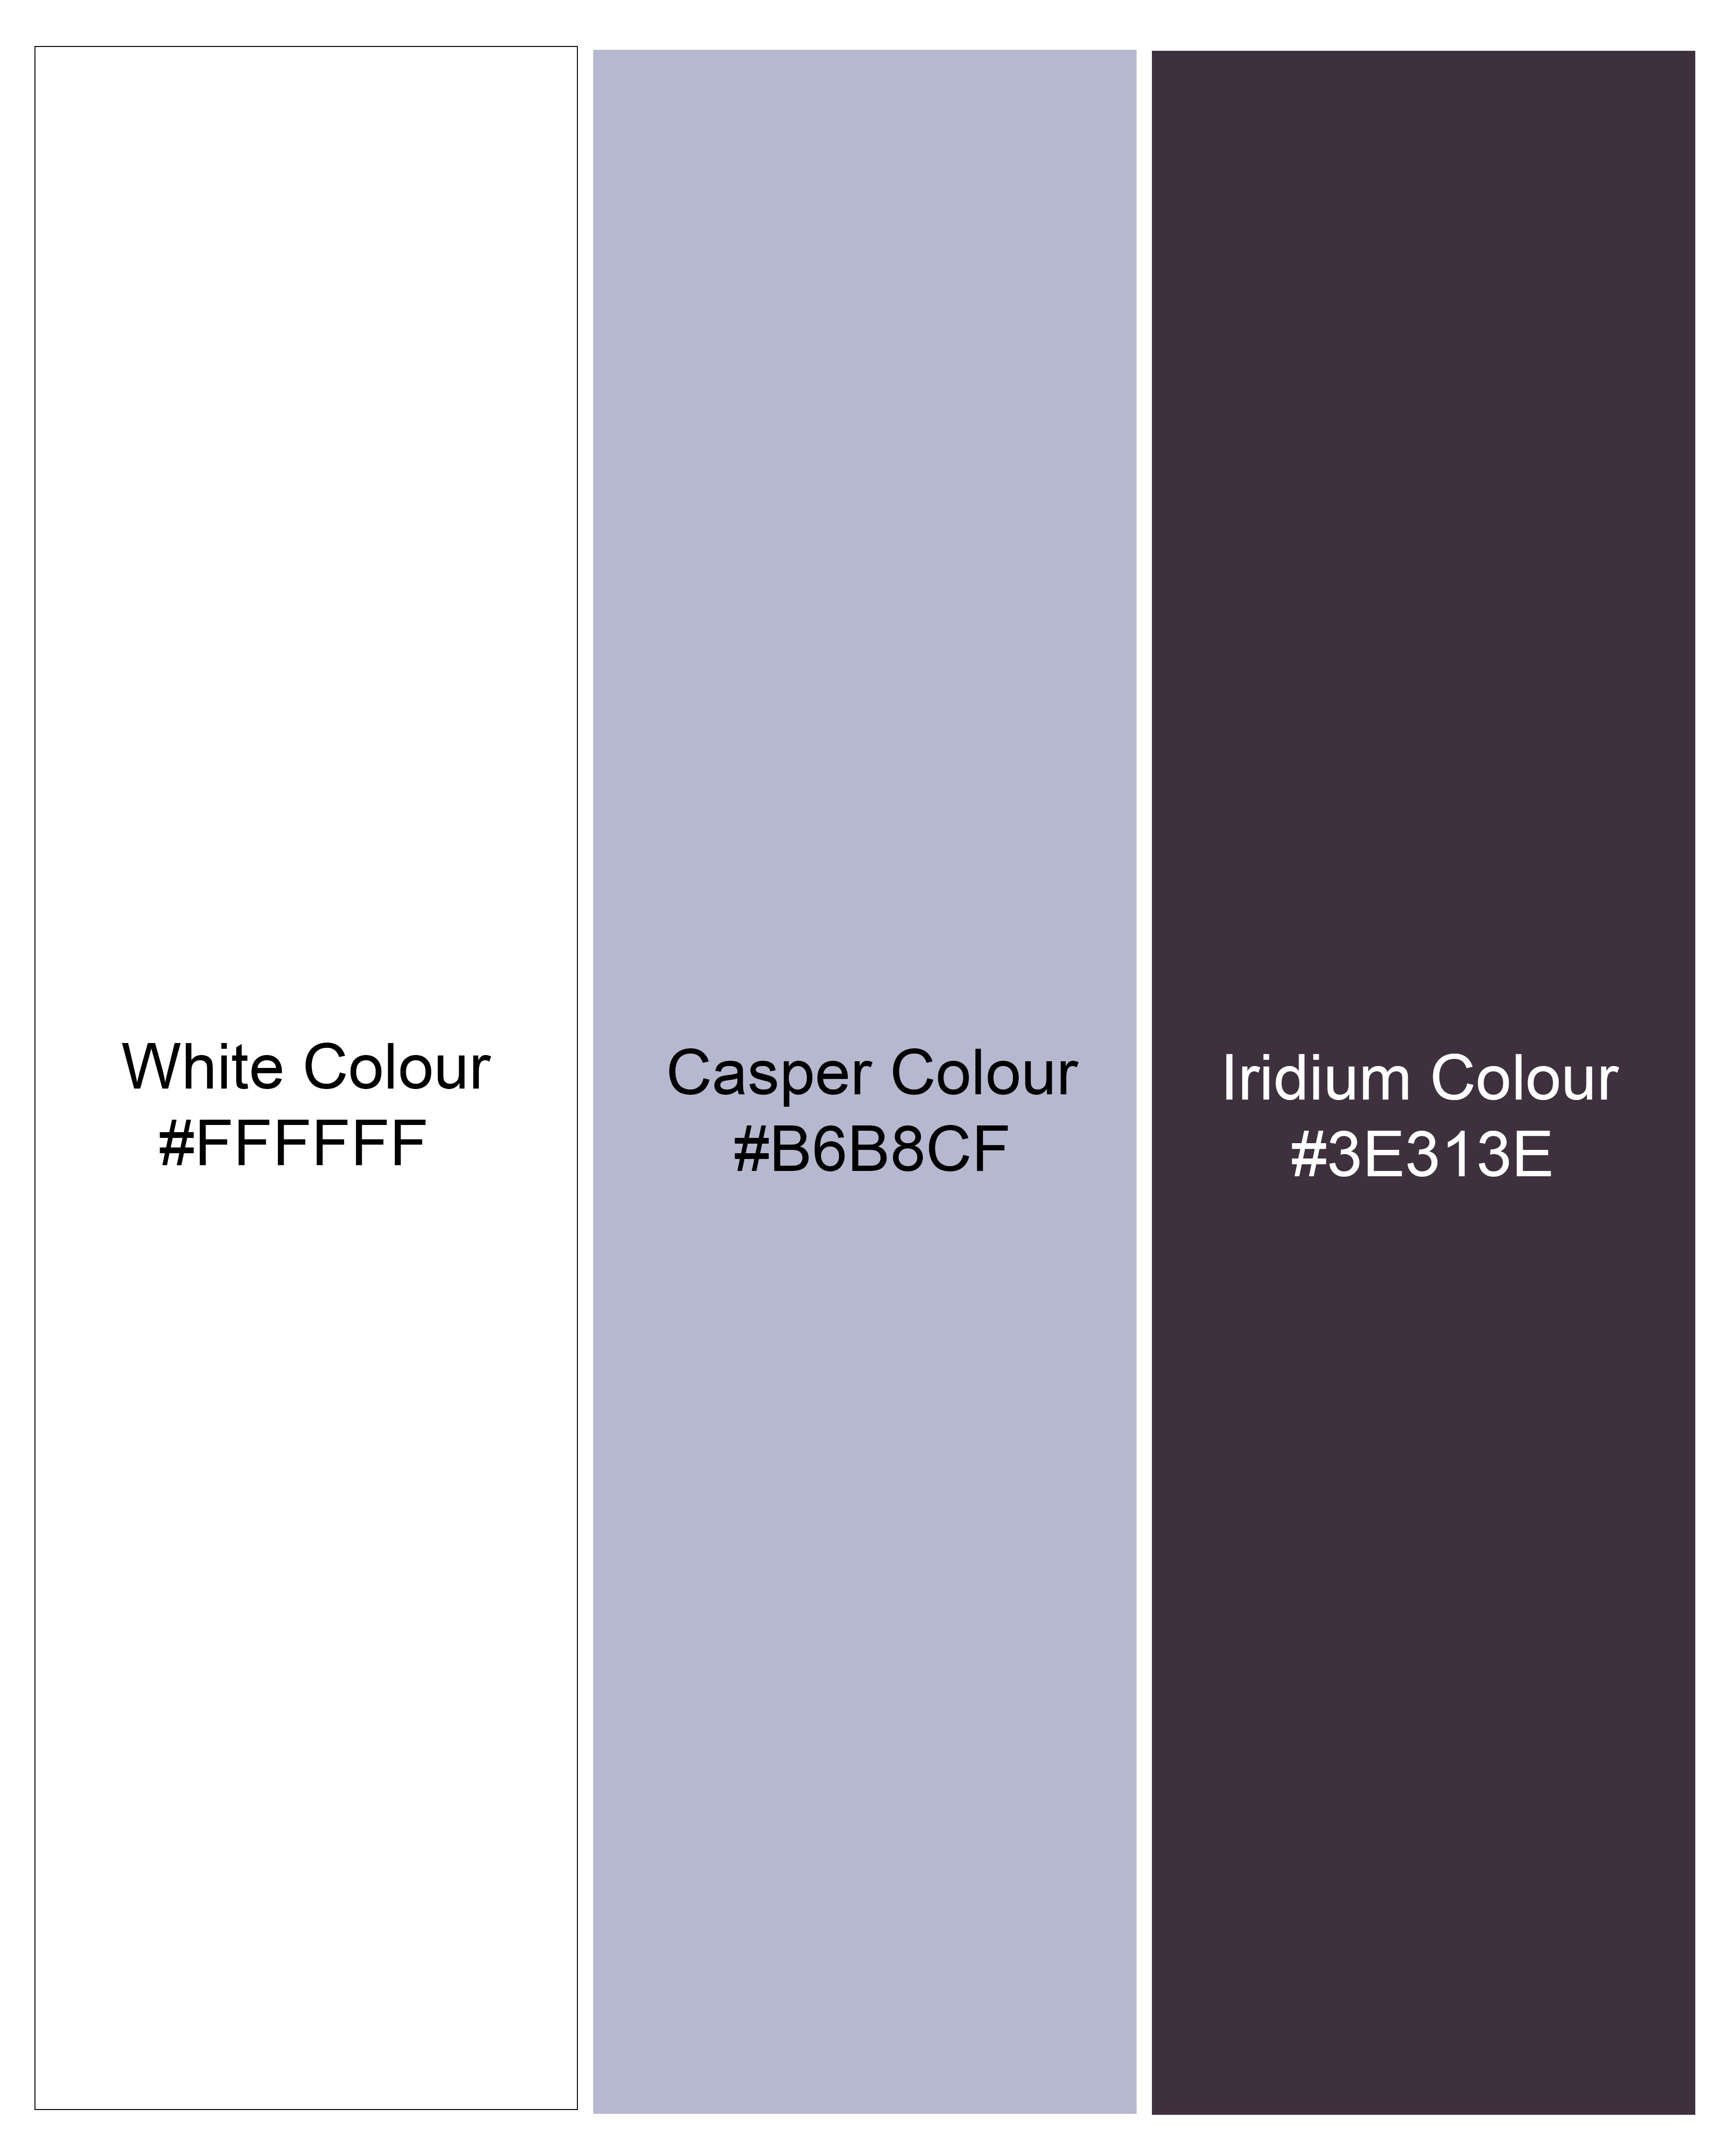 Bright White with Casper Blue Paisley Printed Premium Cotton Shirt WS021-32, WS021-34, WS021-36, WS021-38, WS021-40, WS021-42